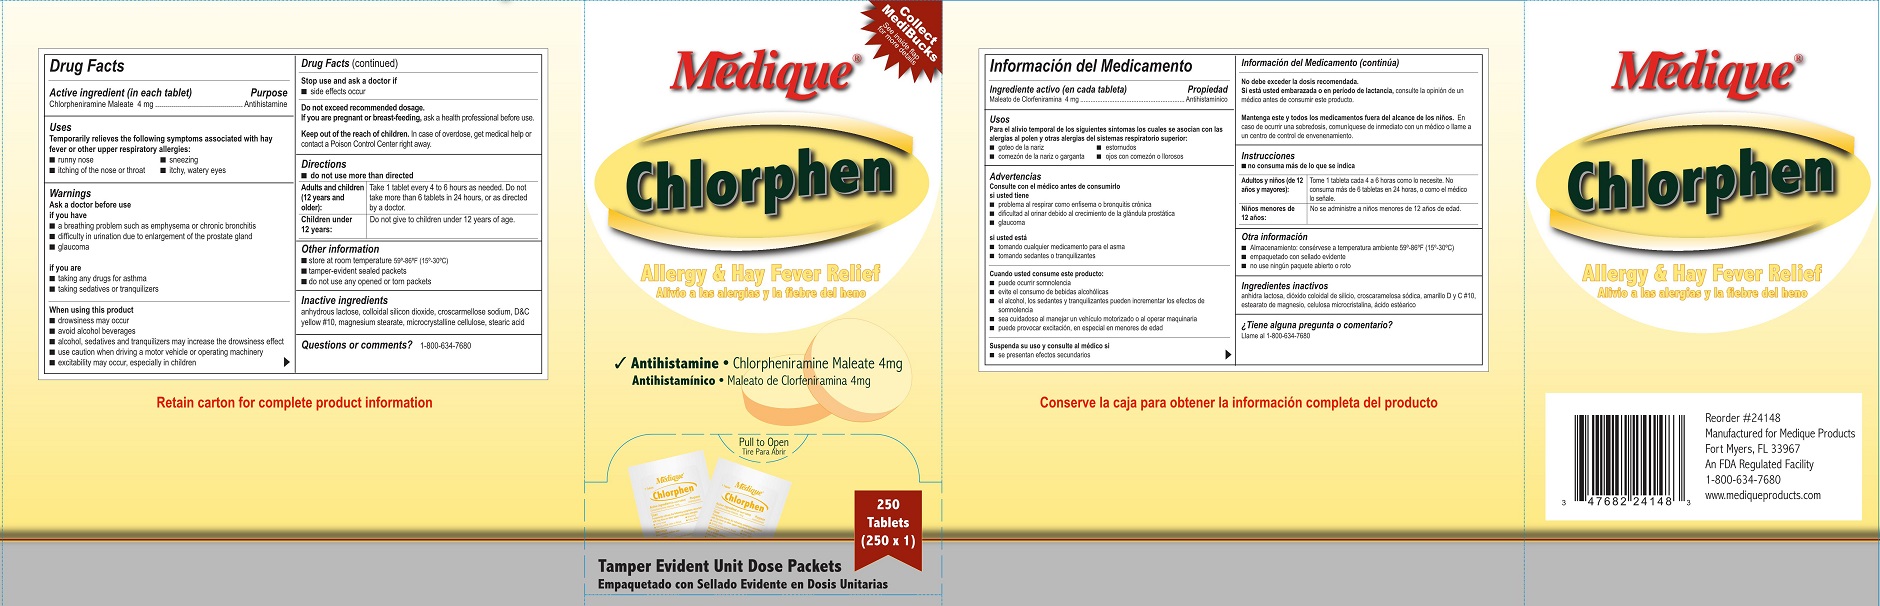 CHLORPHENIRAMINE MALEATE (Medique Chlorphen) - GNH India 